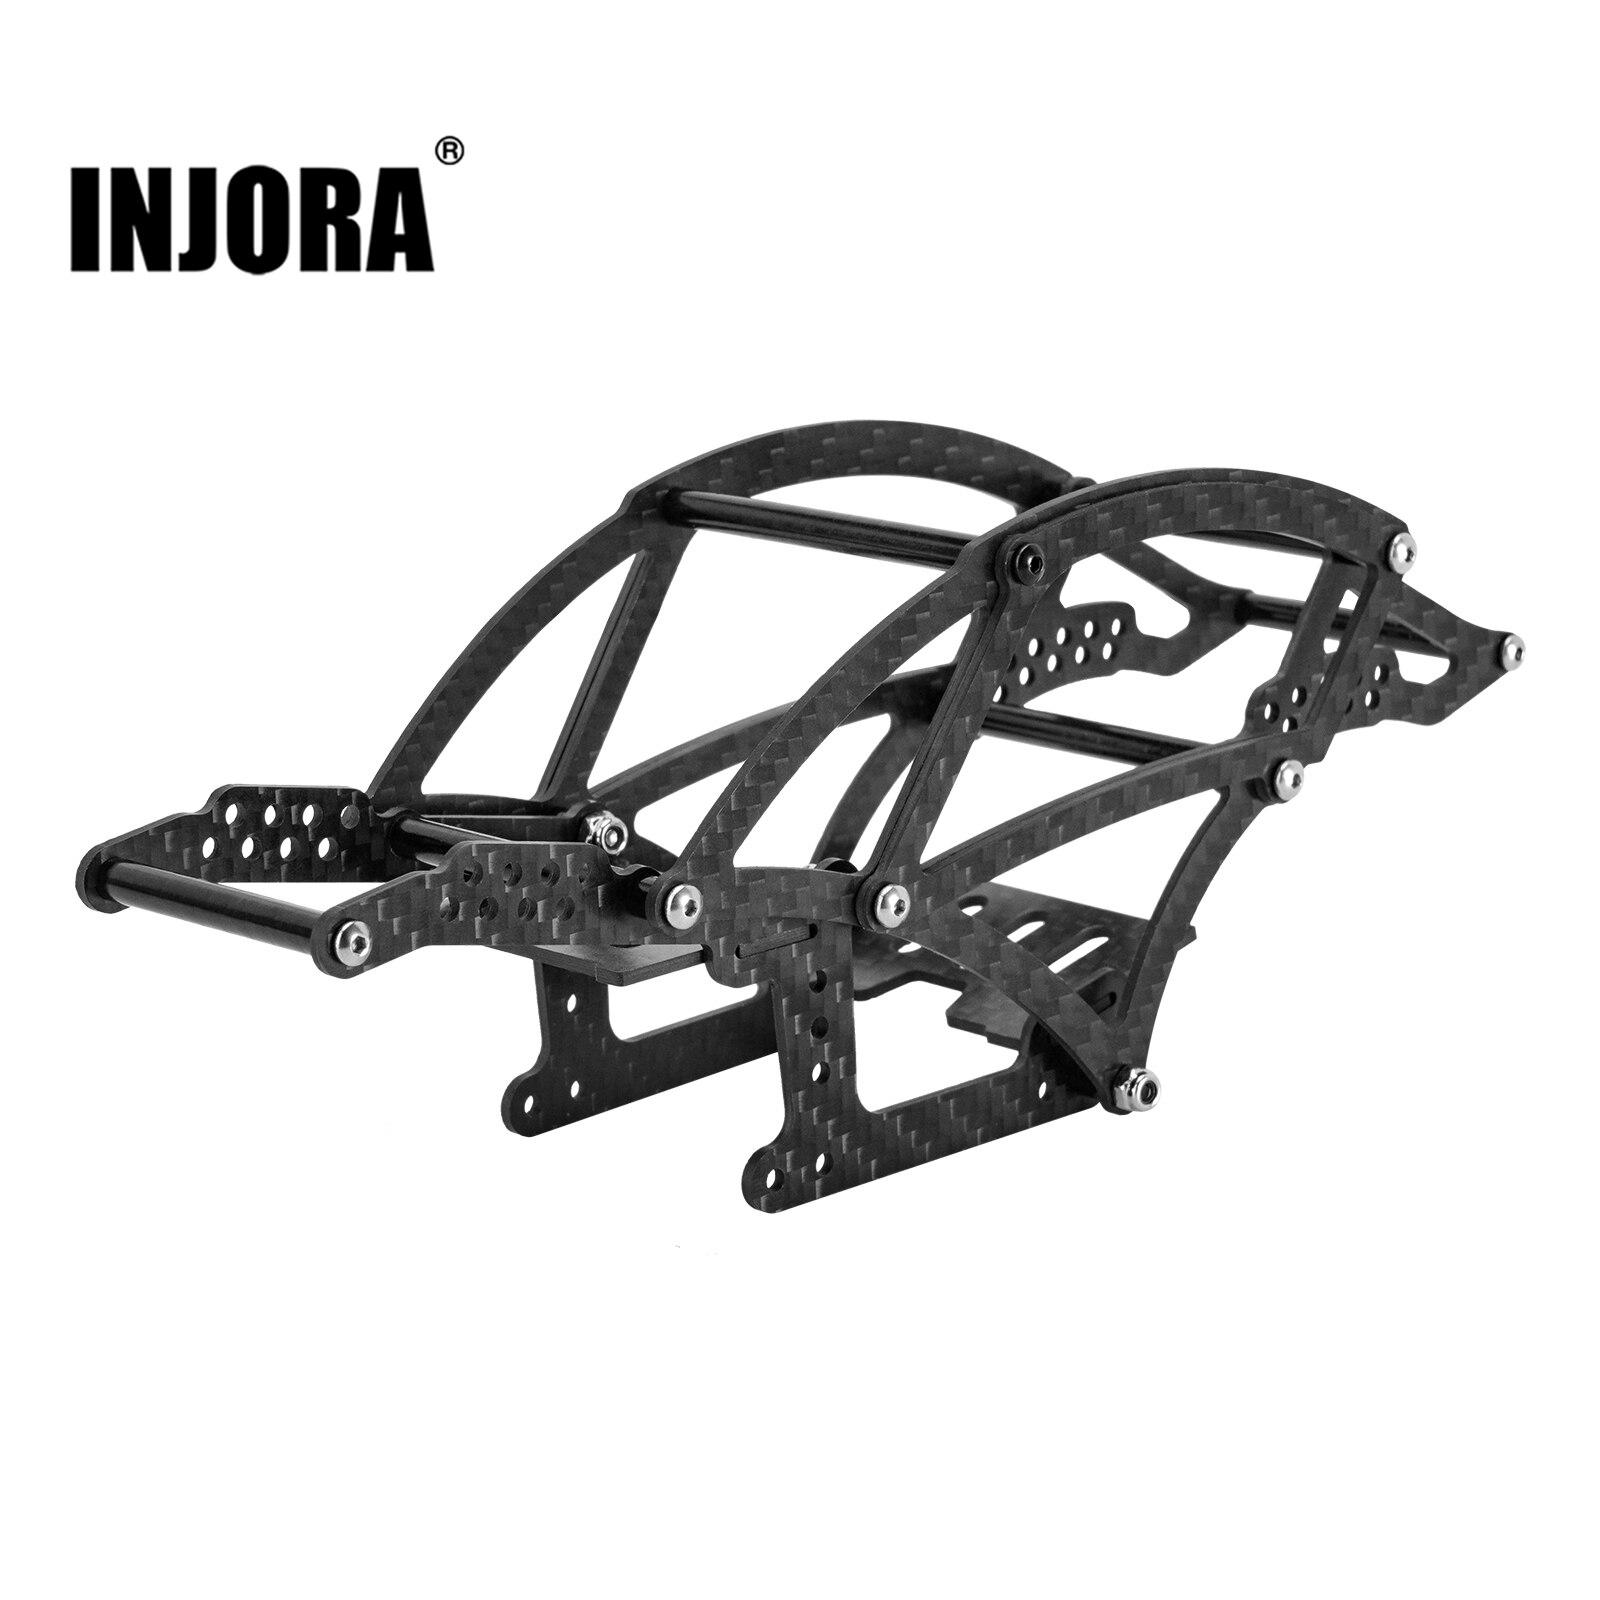 INJORA-Kangaroo-Carbon-Fiber-Chassis-Frame-Kit-For-1-18-RC-Crawler-TRX4M-Upgrade-4M-39.jpg